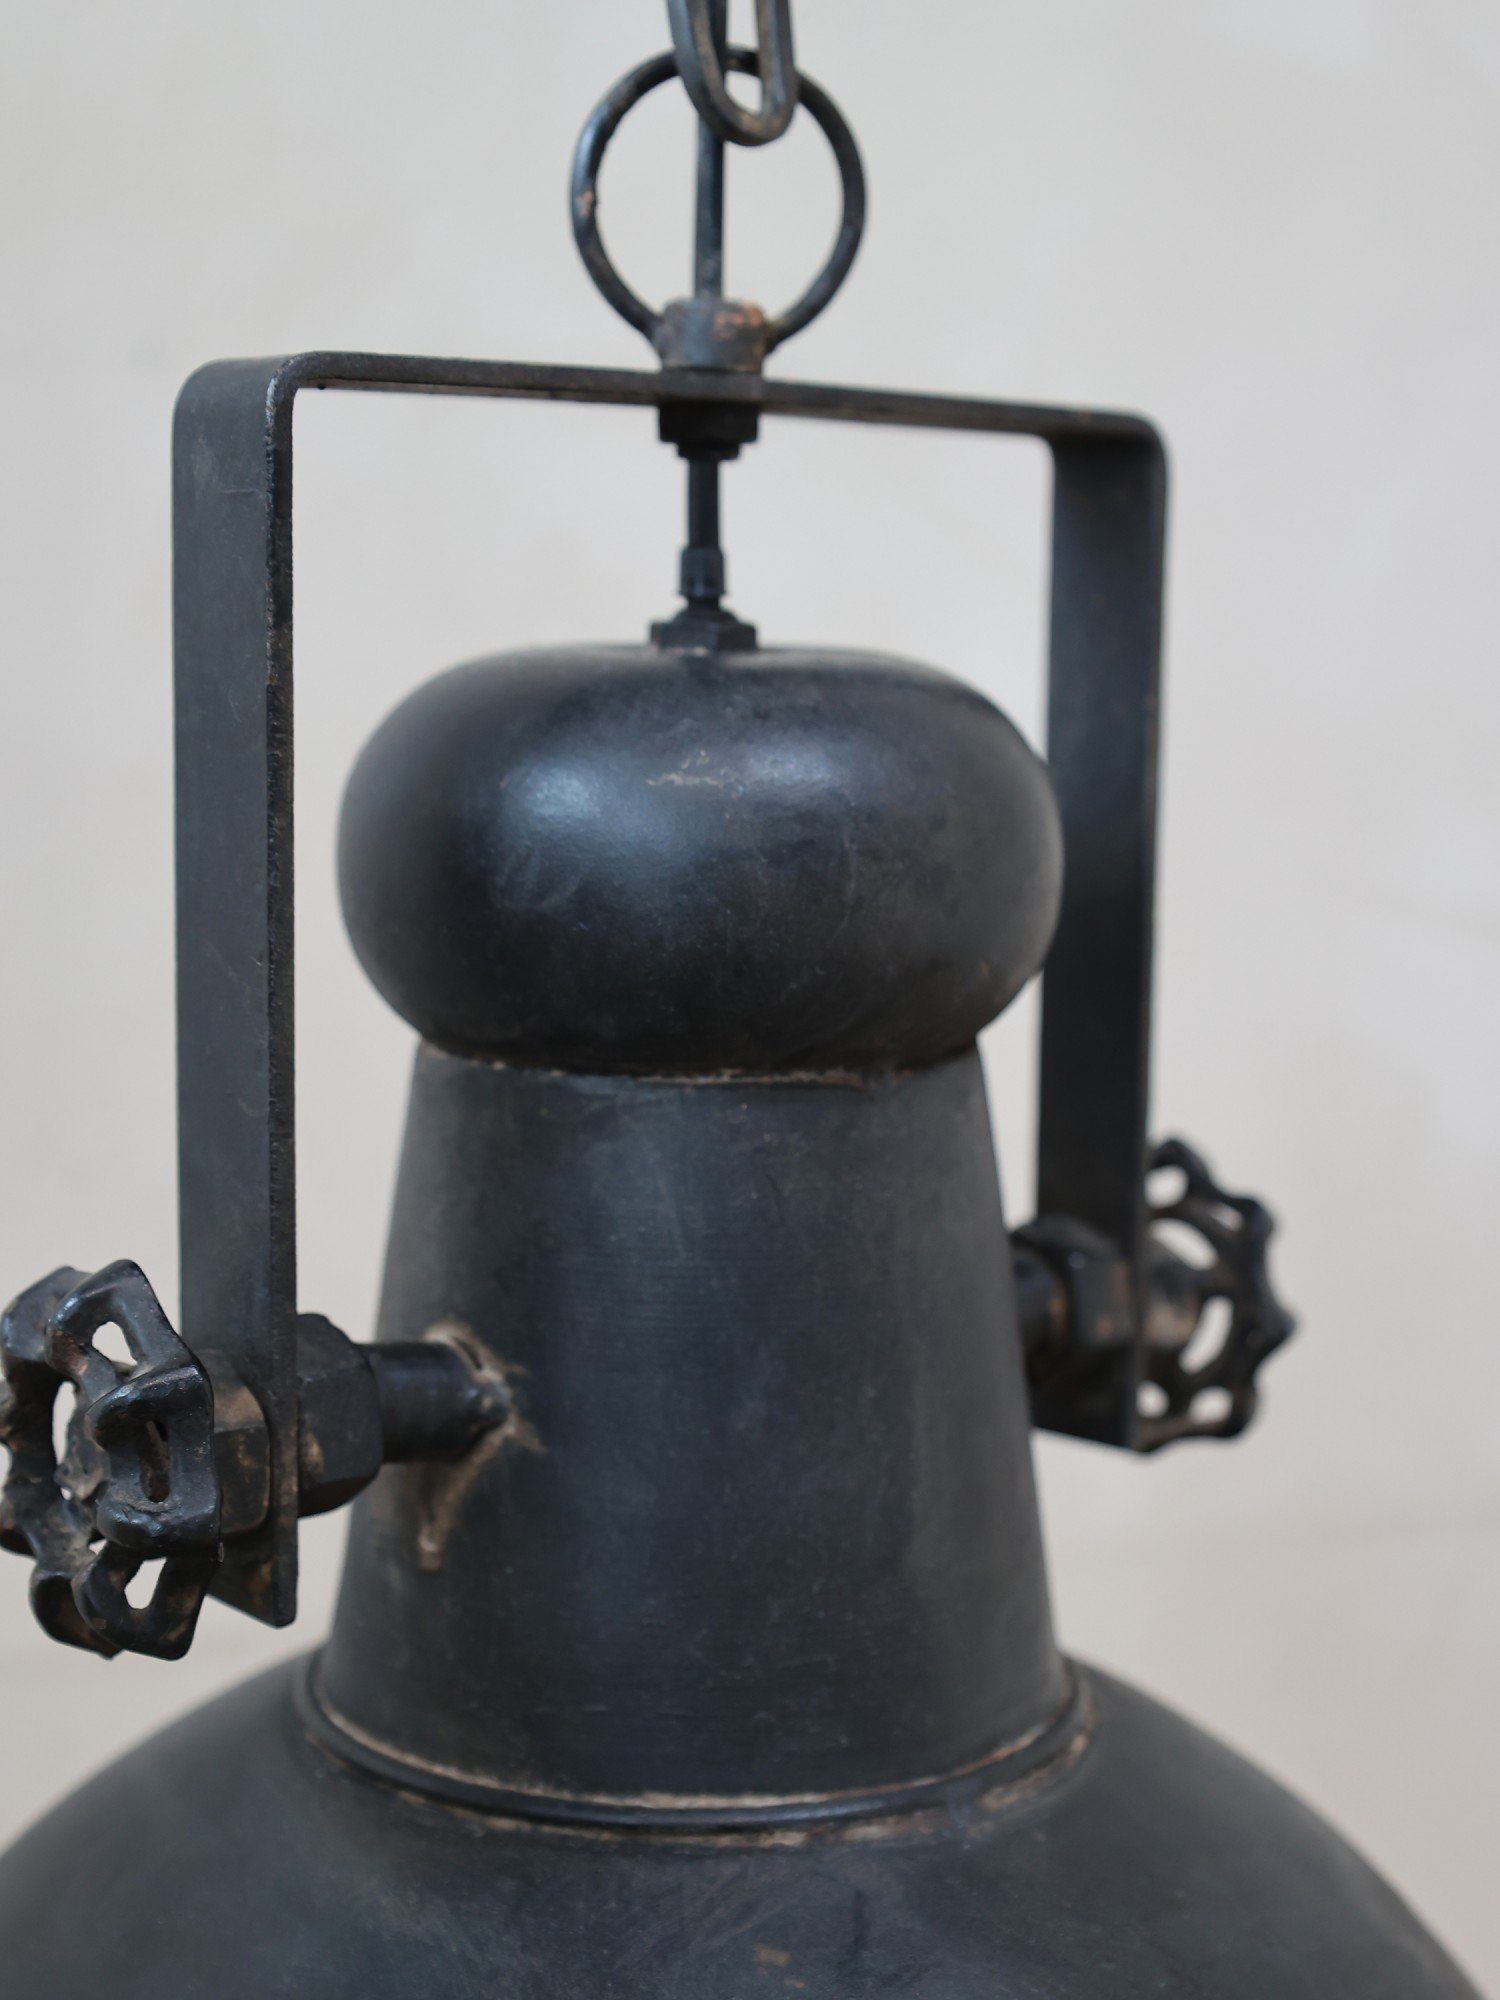 AURUM Hängeleuchte Lampe Antique schwarz antique H40/D32 Factory cm * Chic